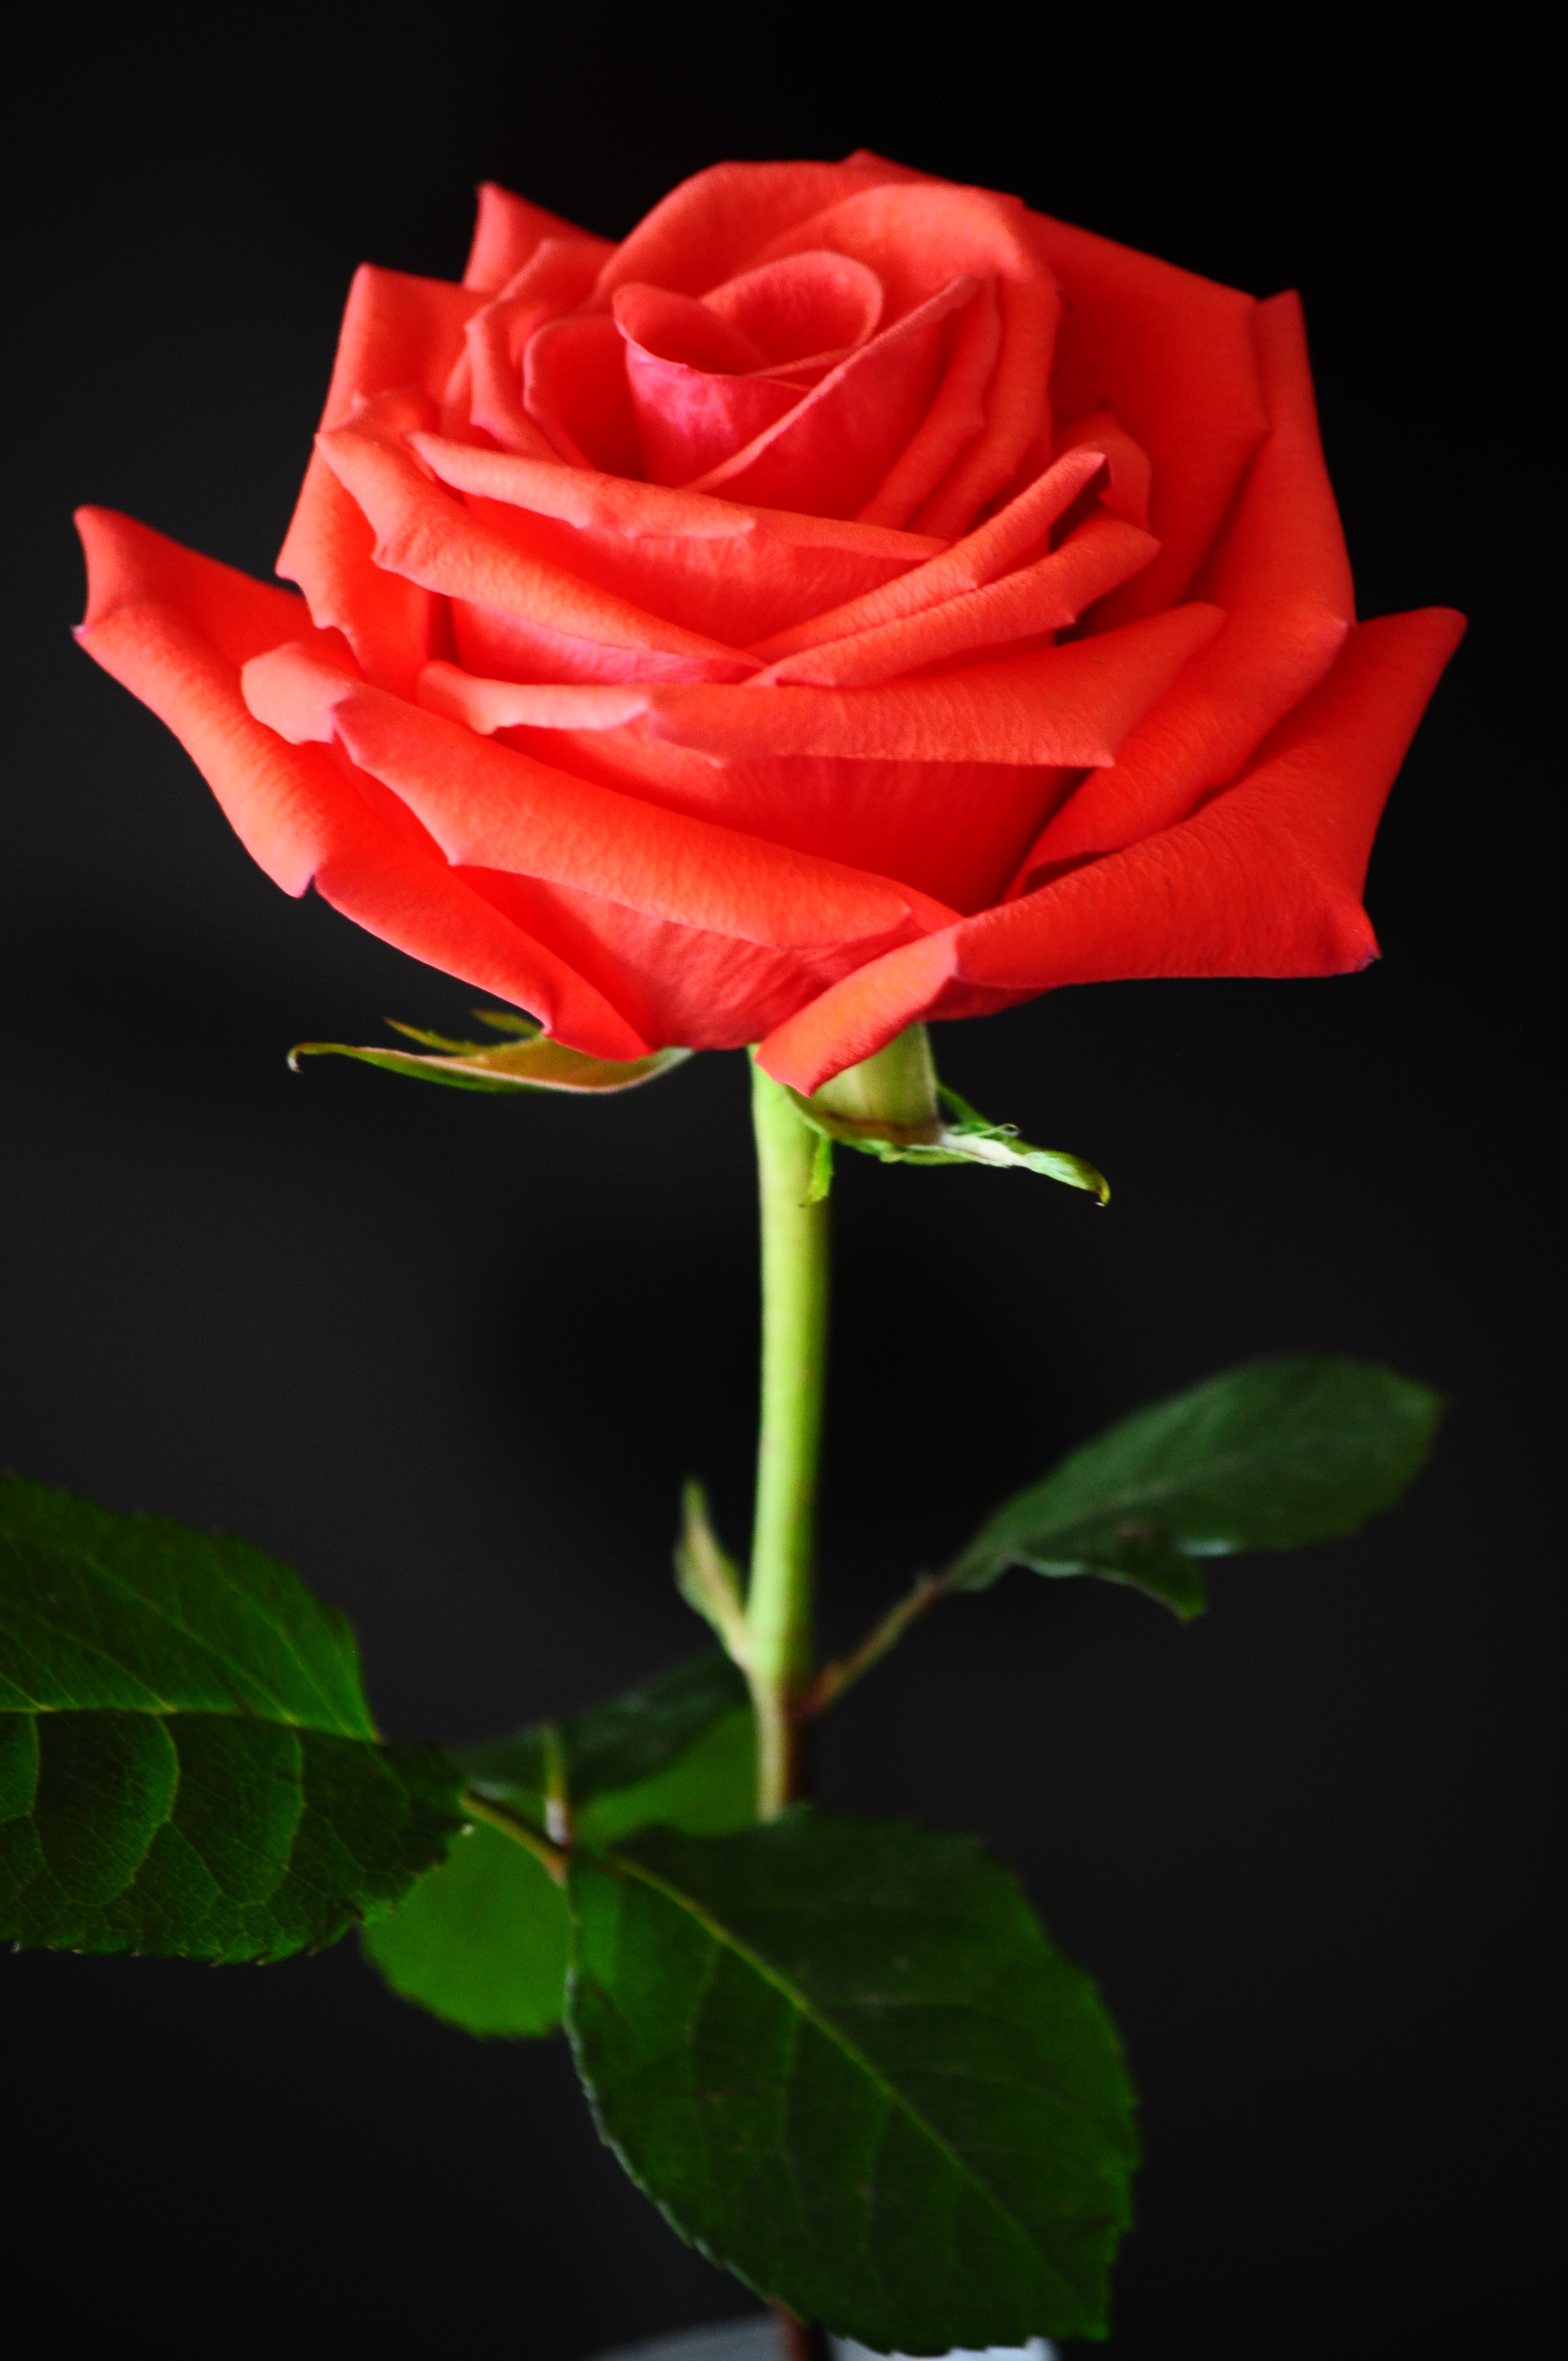 File Red Rose Against A Black Background Jpg Wikimedia